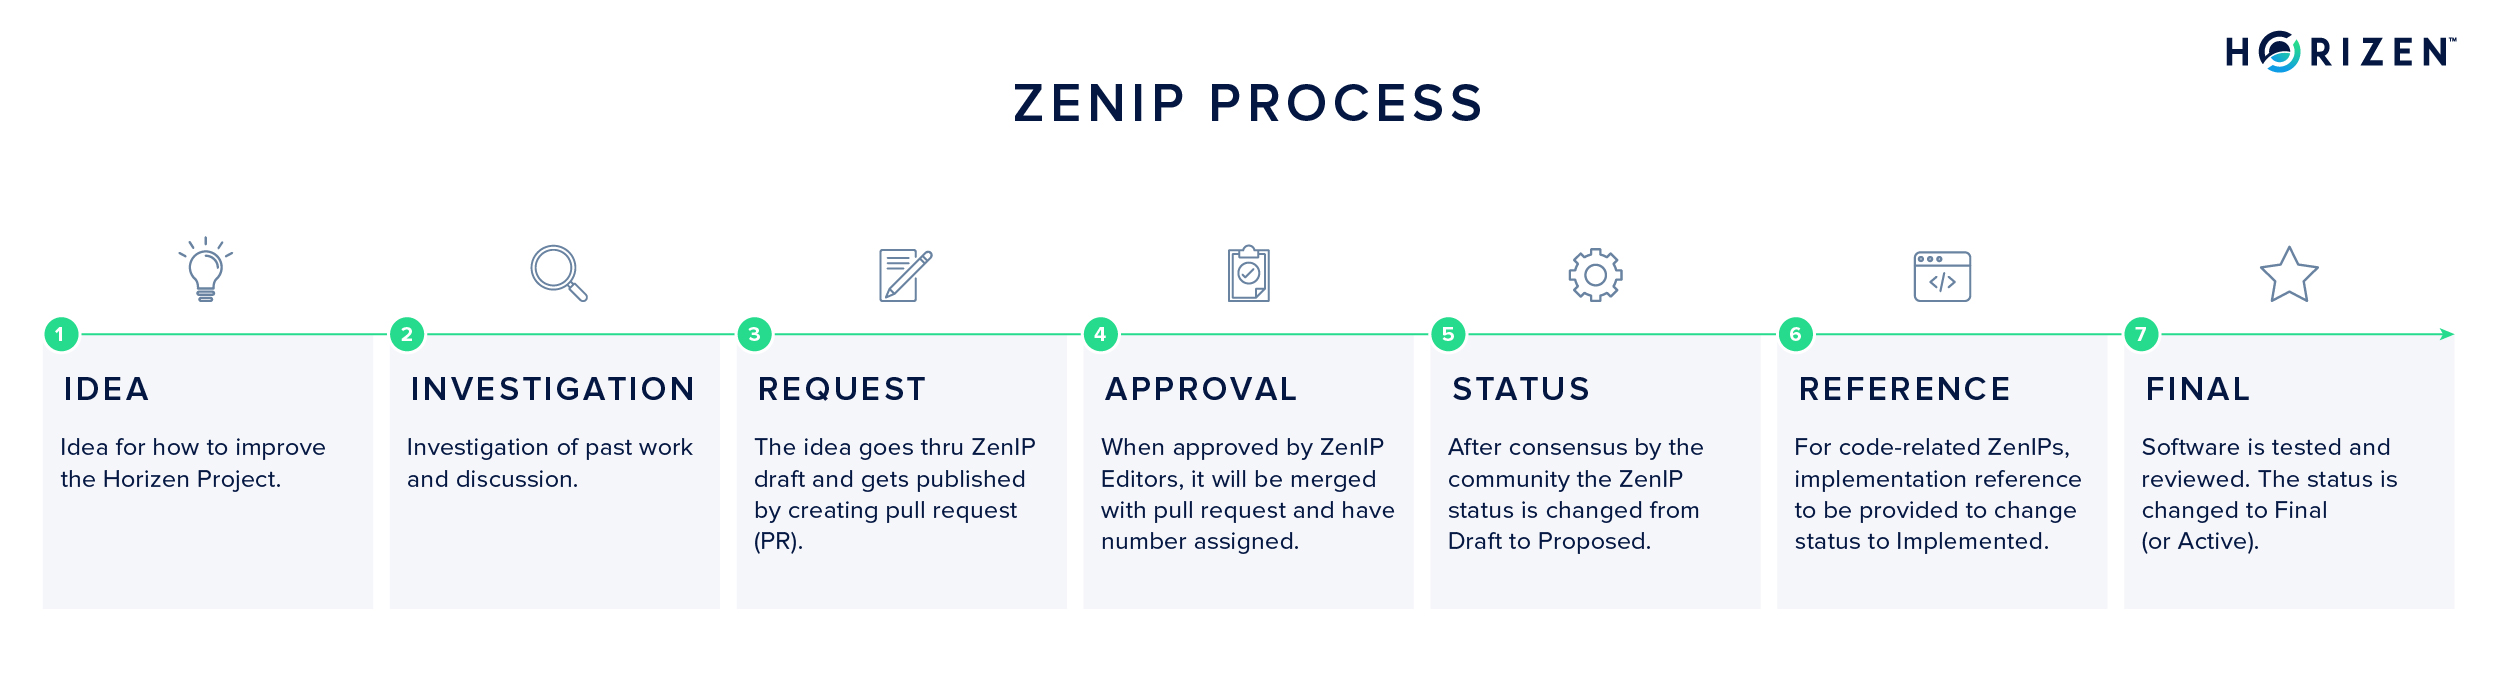 The ZenIP Workflow